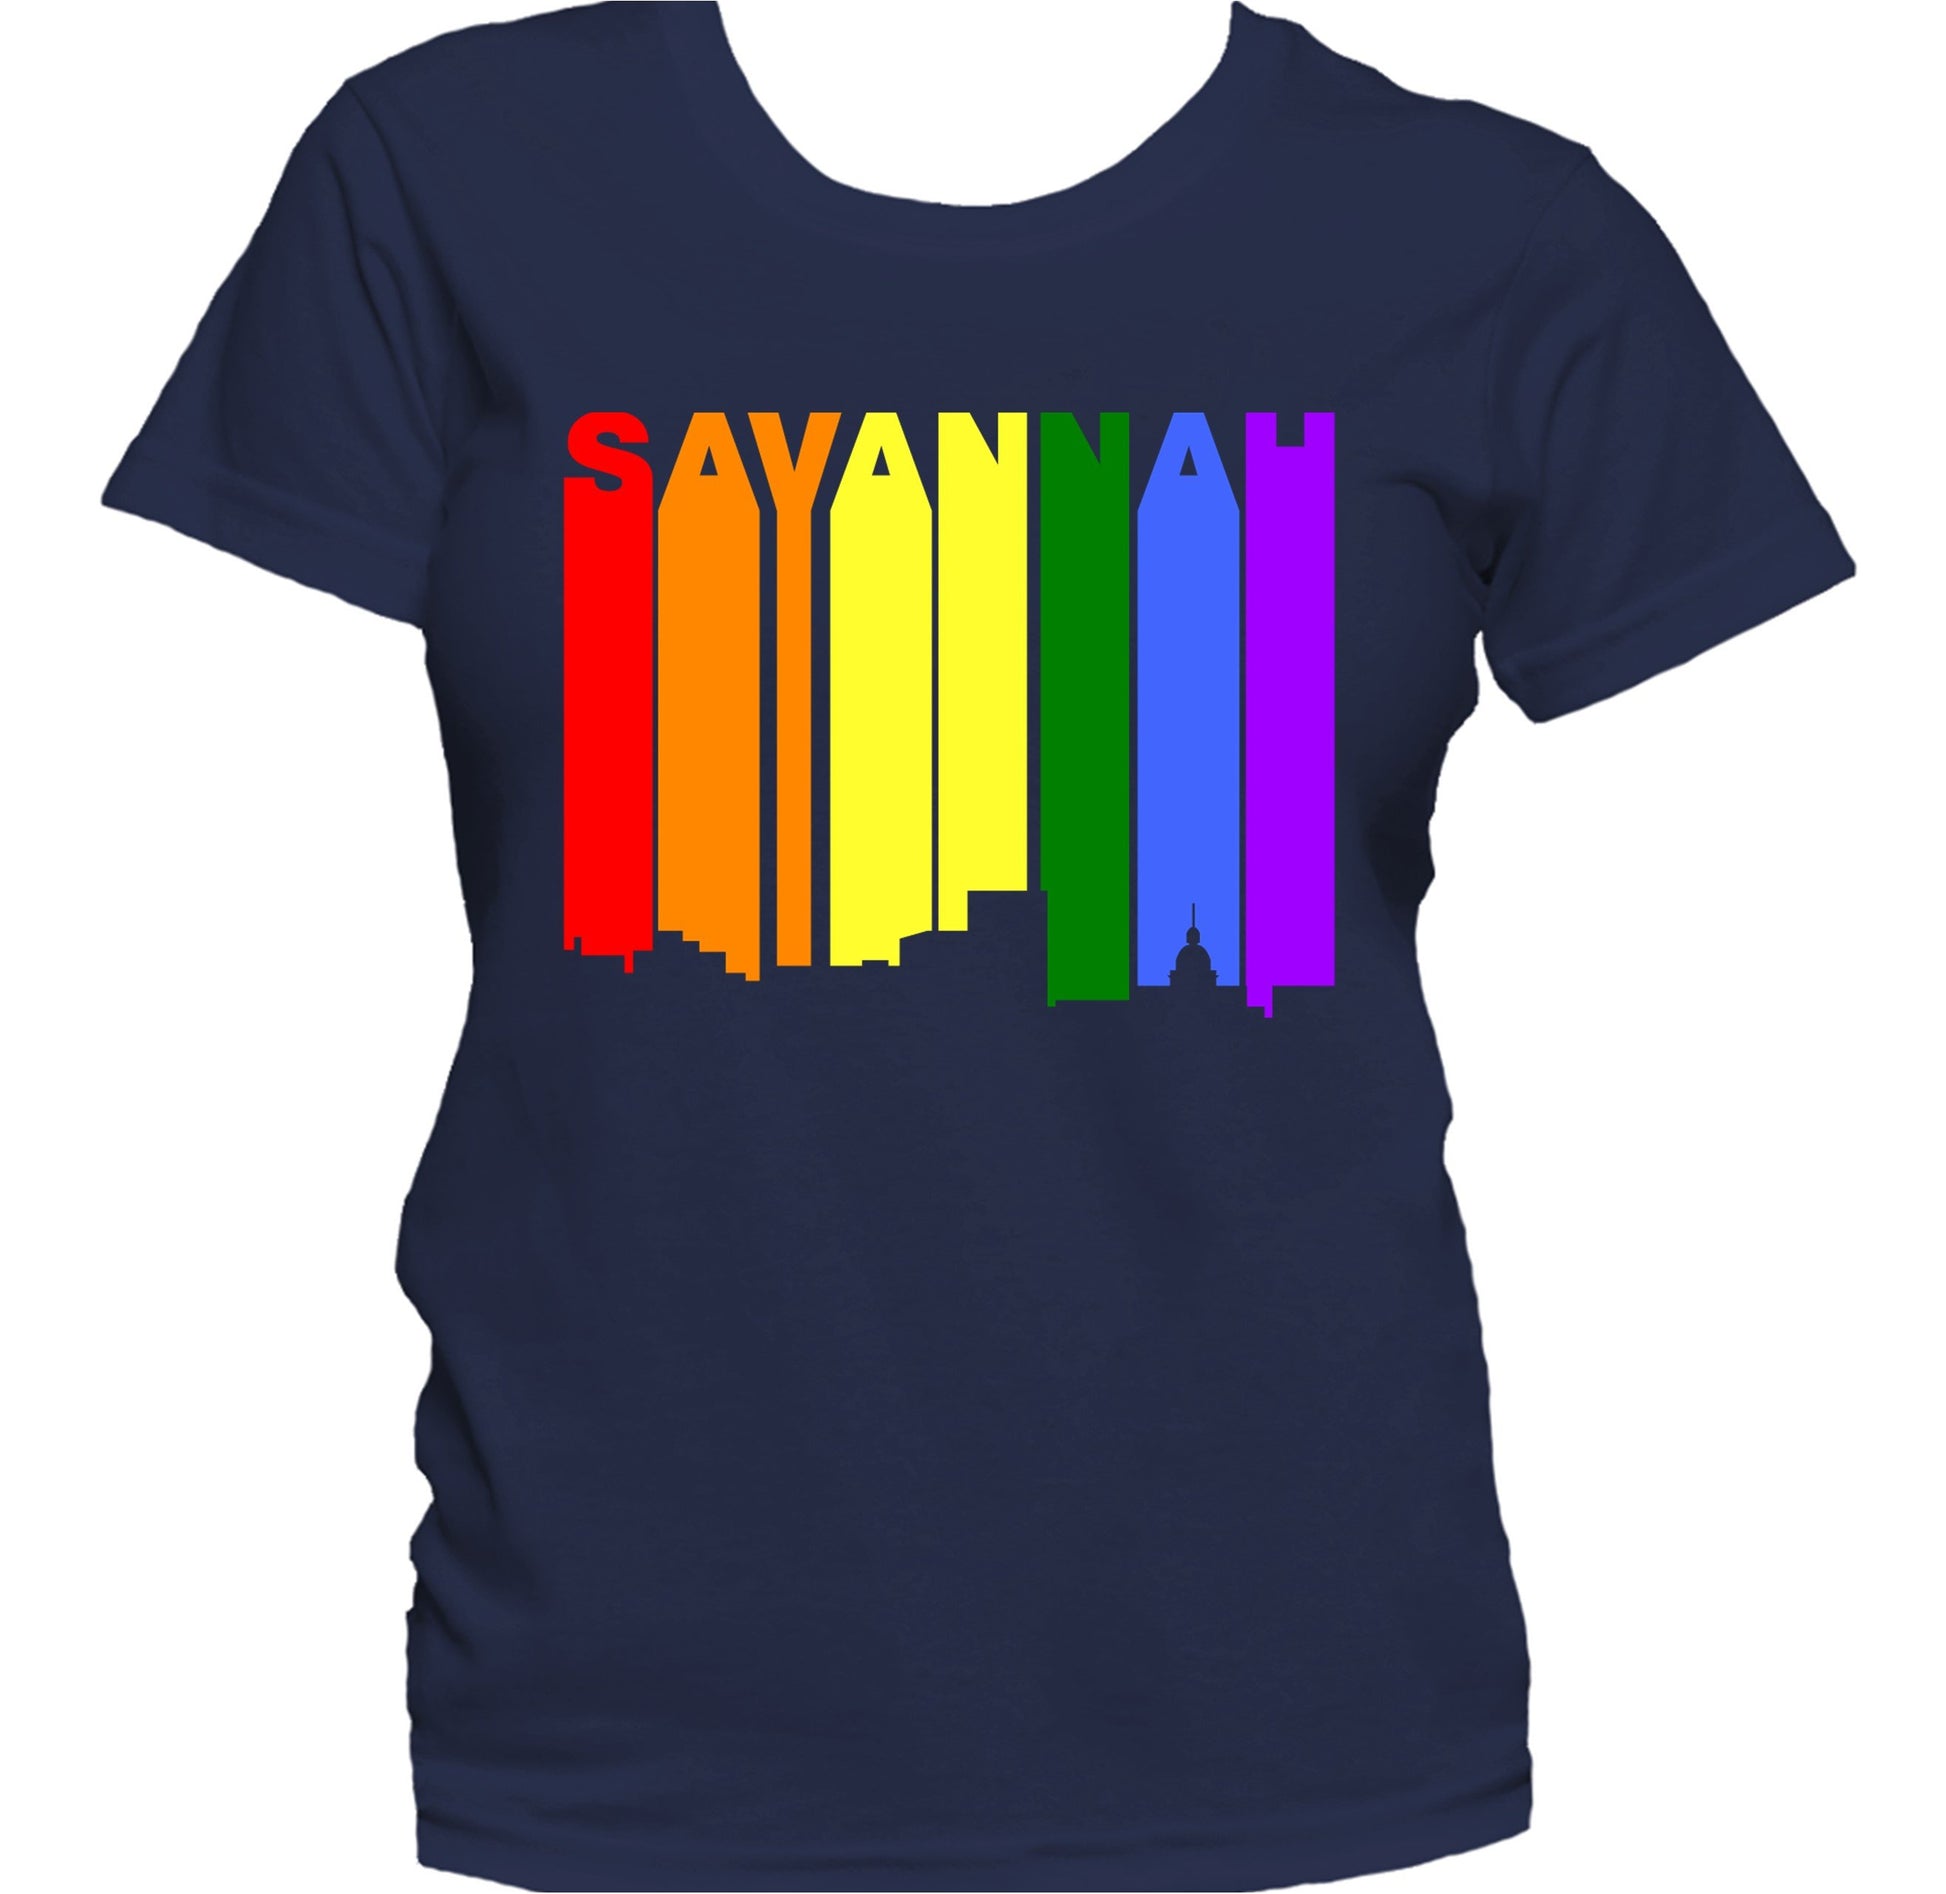 Savannah Georgia LGBTQ Gay Pride Rainbow Skyline Women's T-Shirt